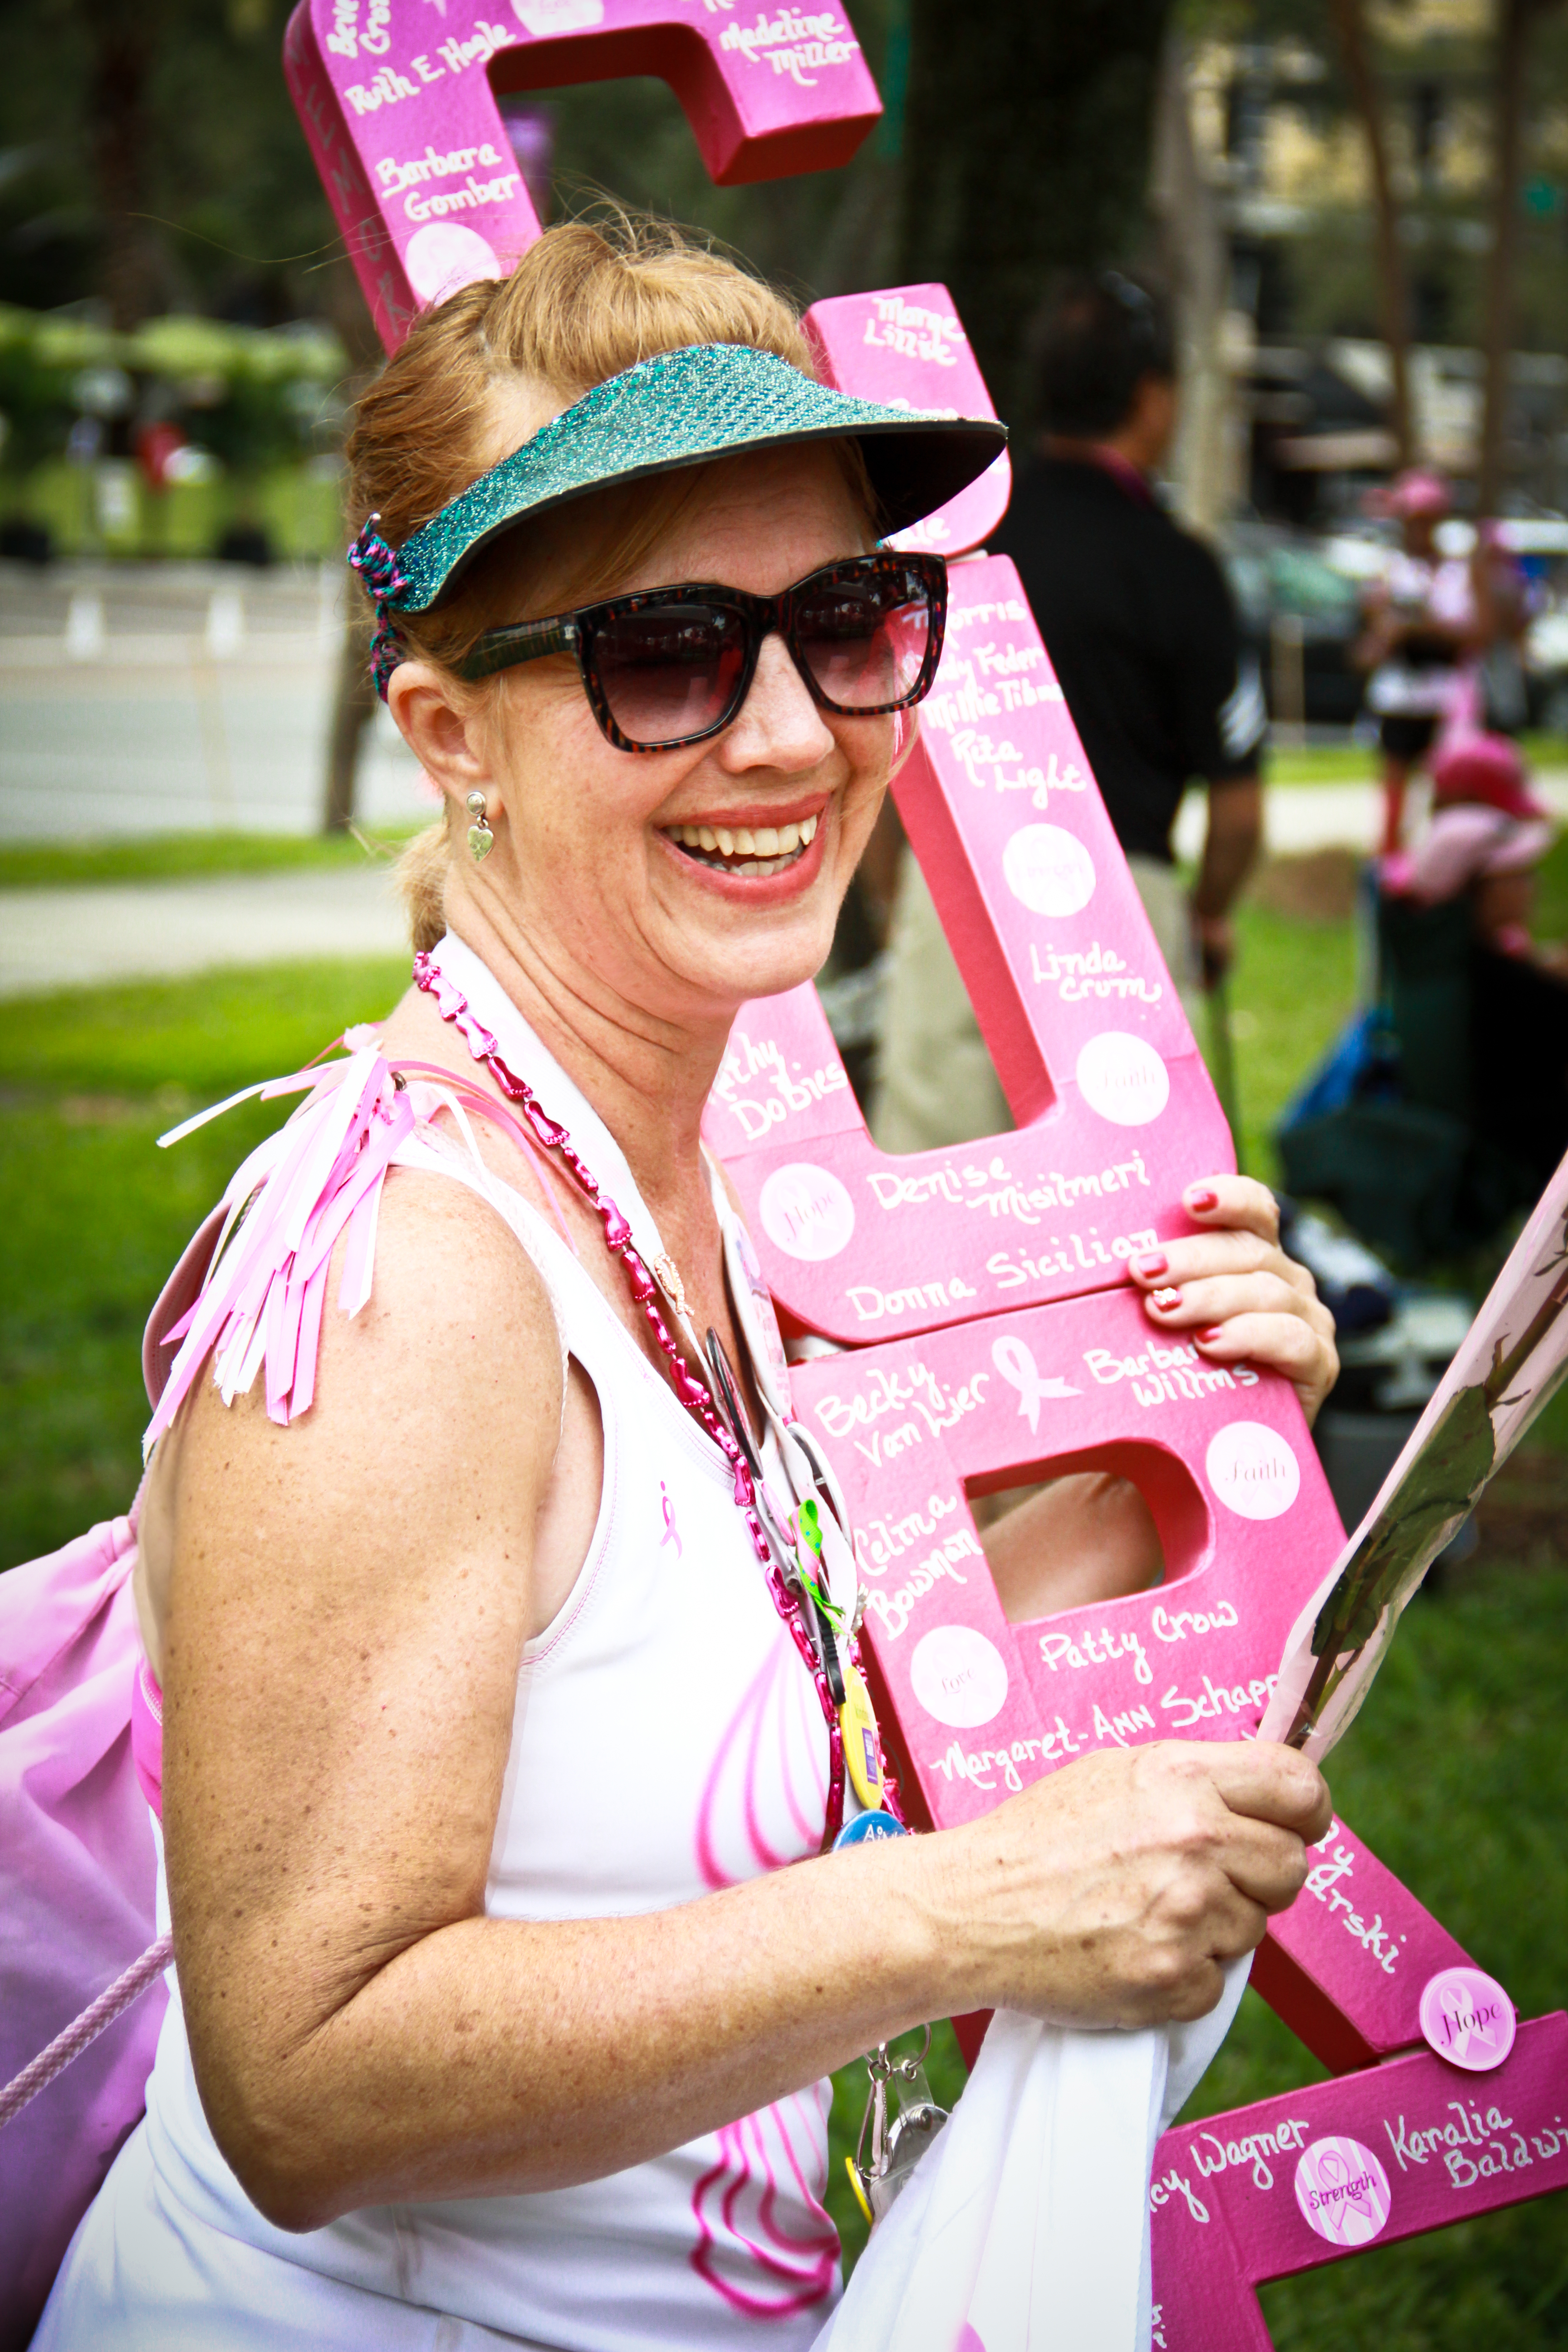  Susan G. Komen Breast Cancer 3-Day Walk